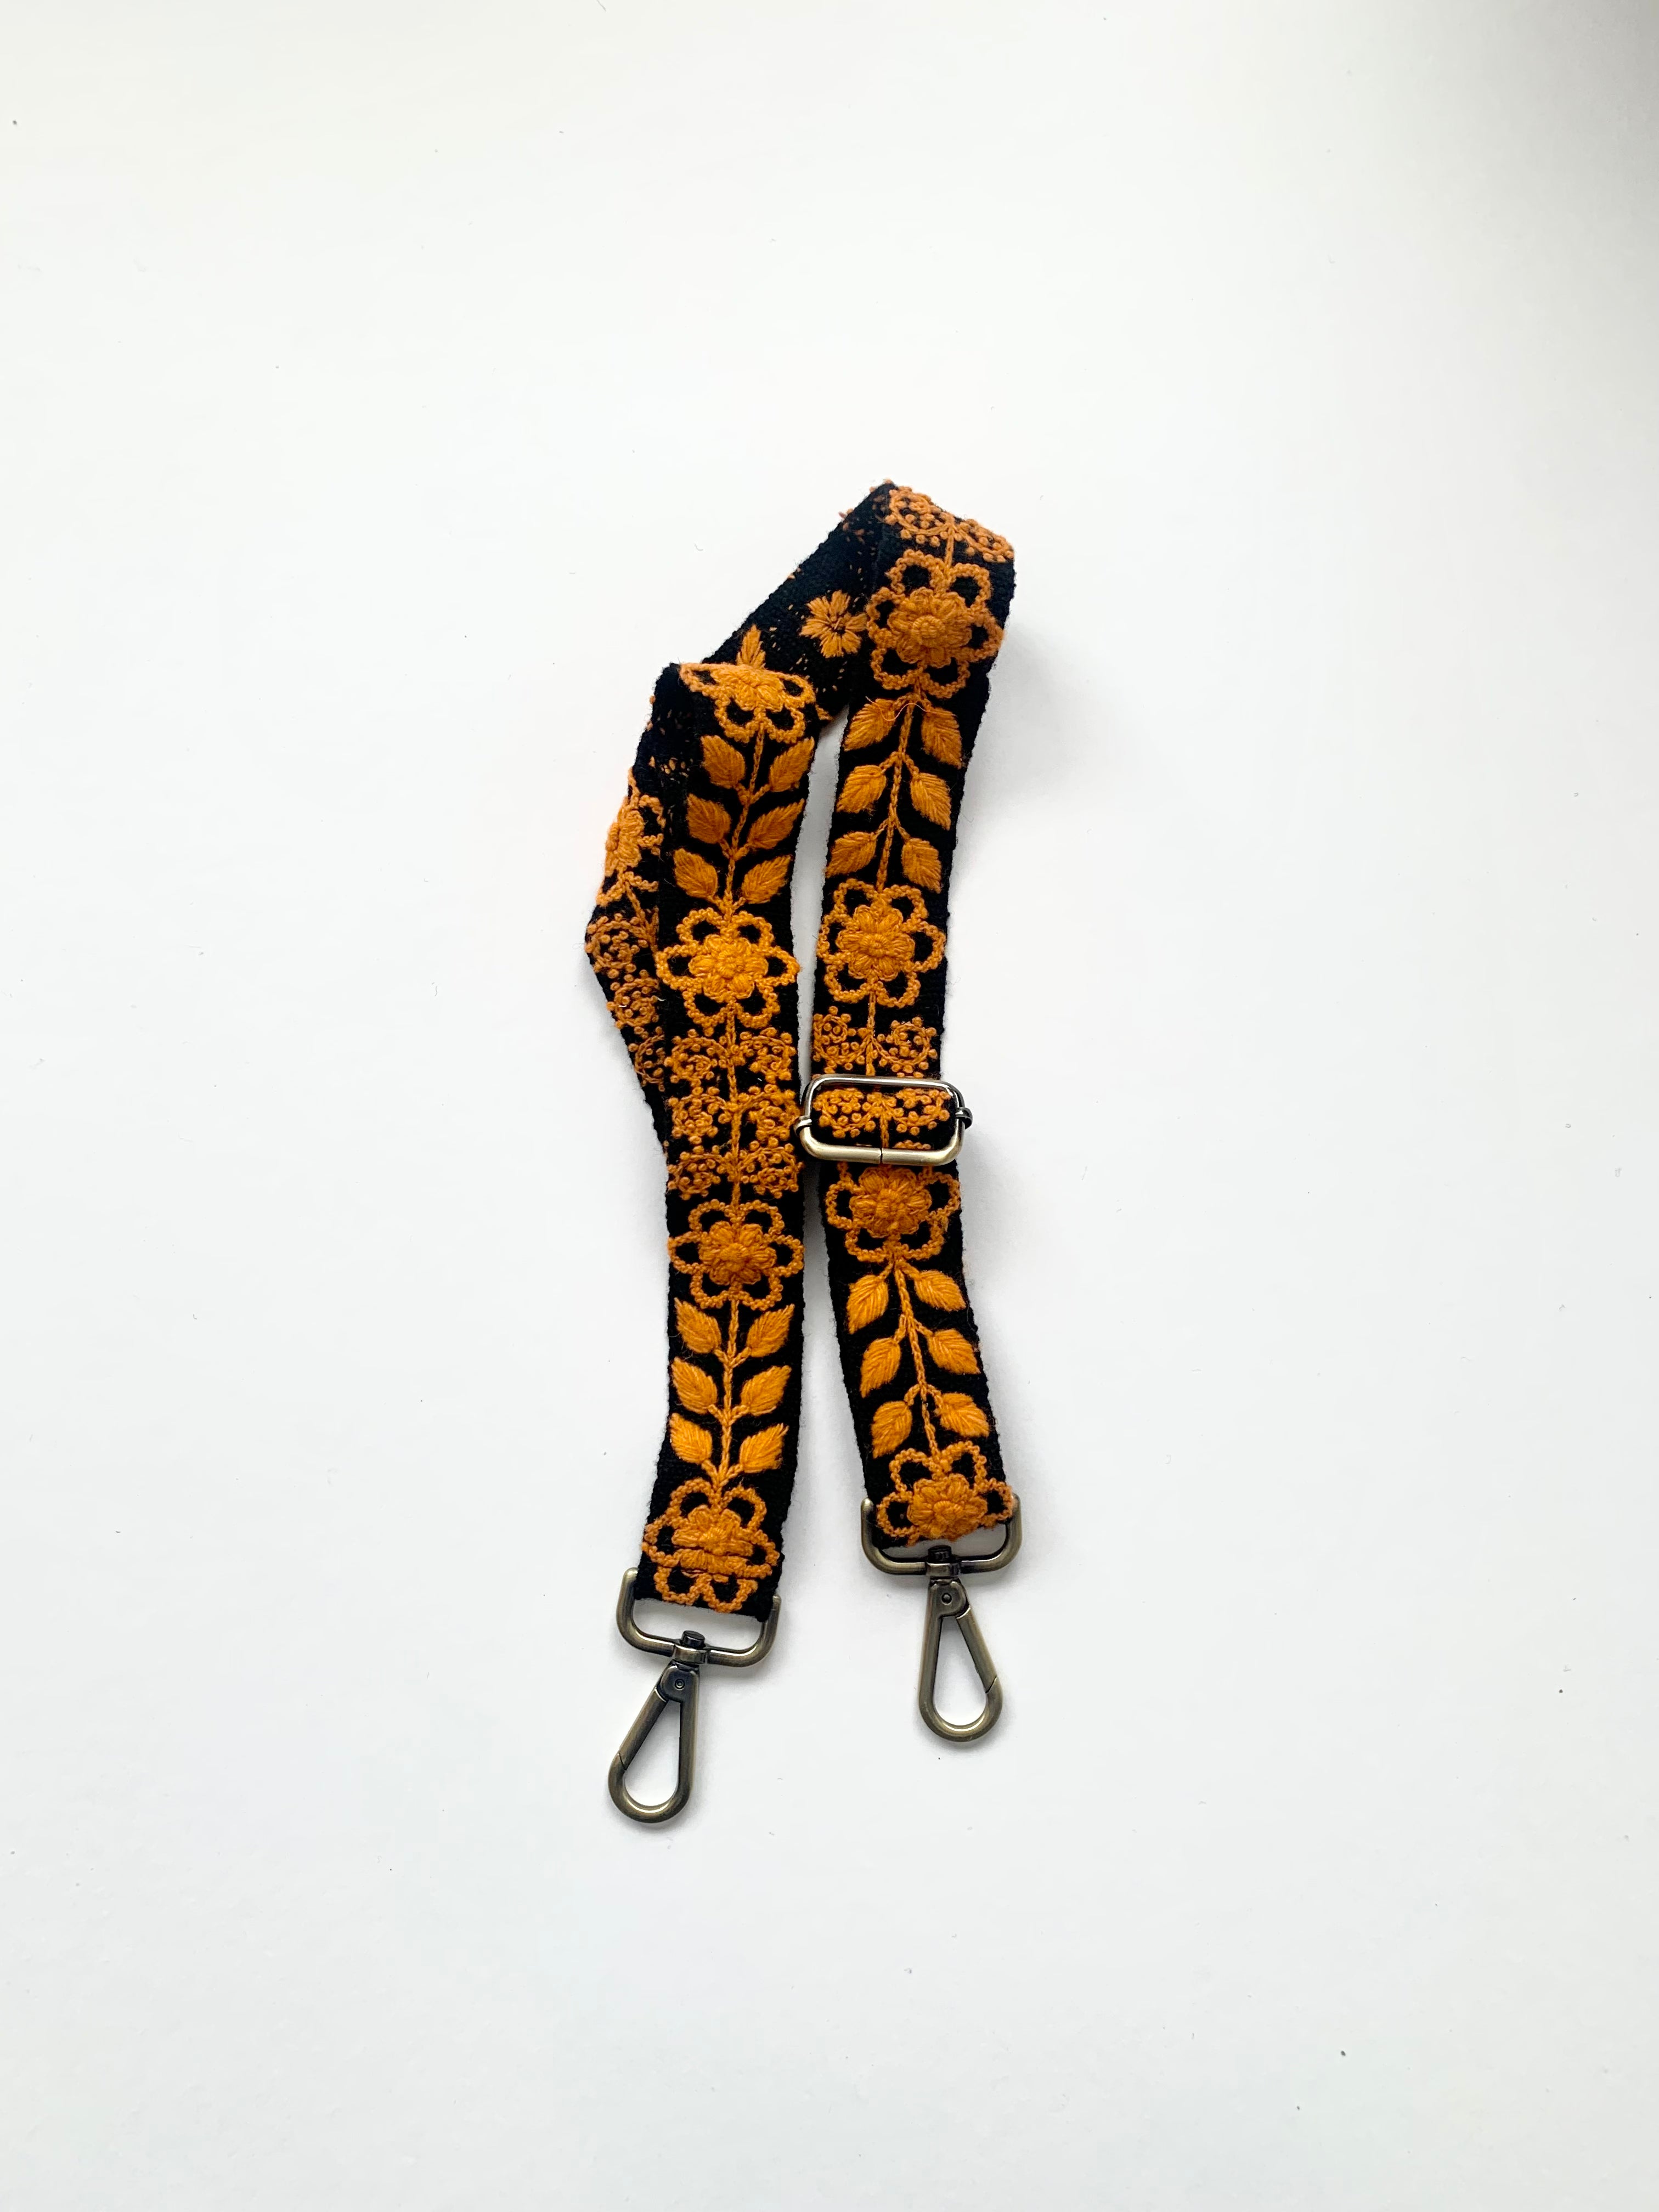 Black and orange strap with metal hooks